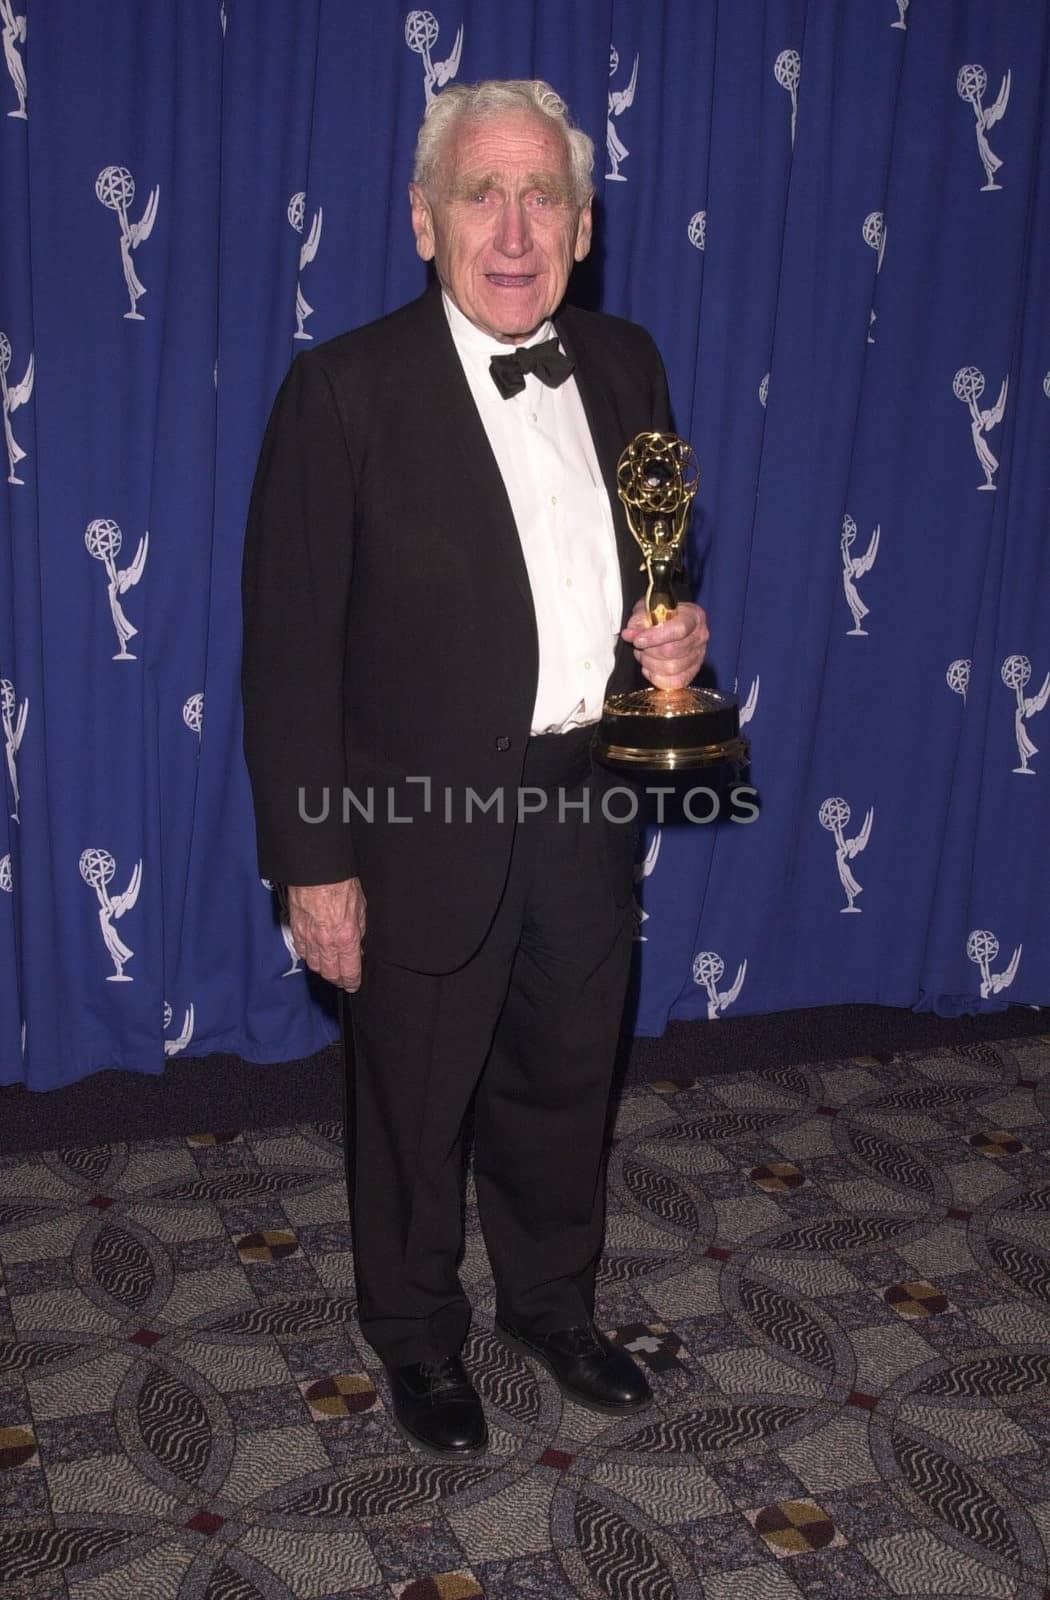 James Whitmore at the Creative Arts Emmy Awards in Pasadena. 08-26-00